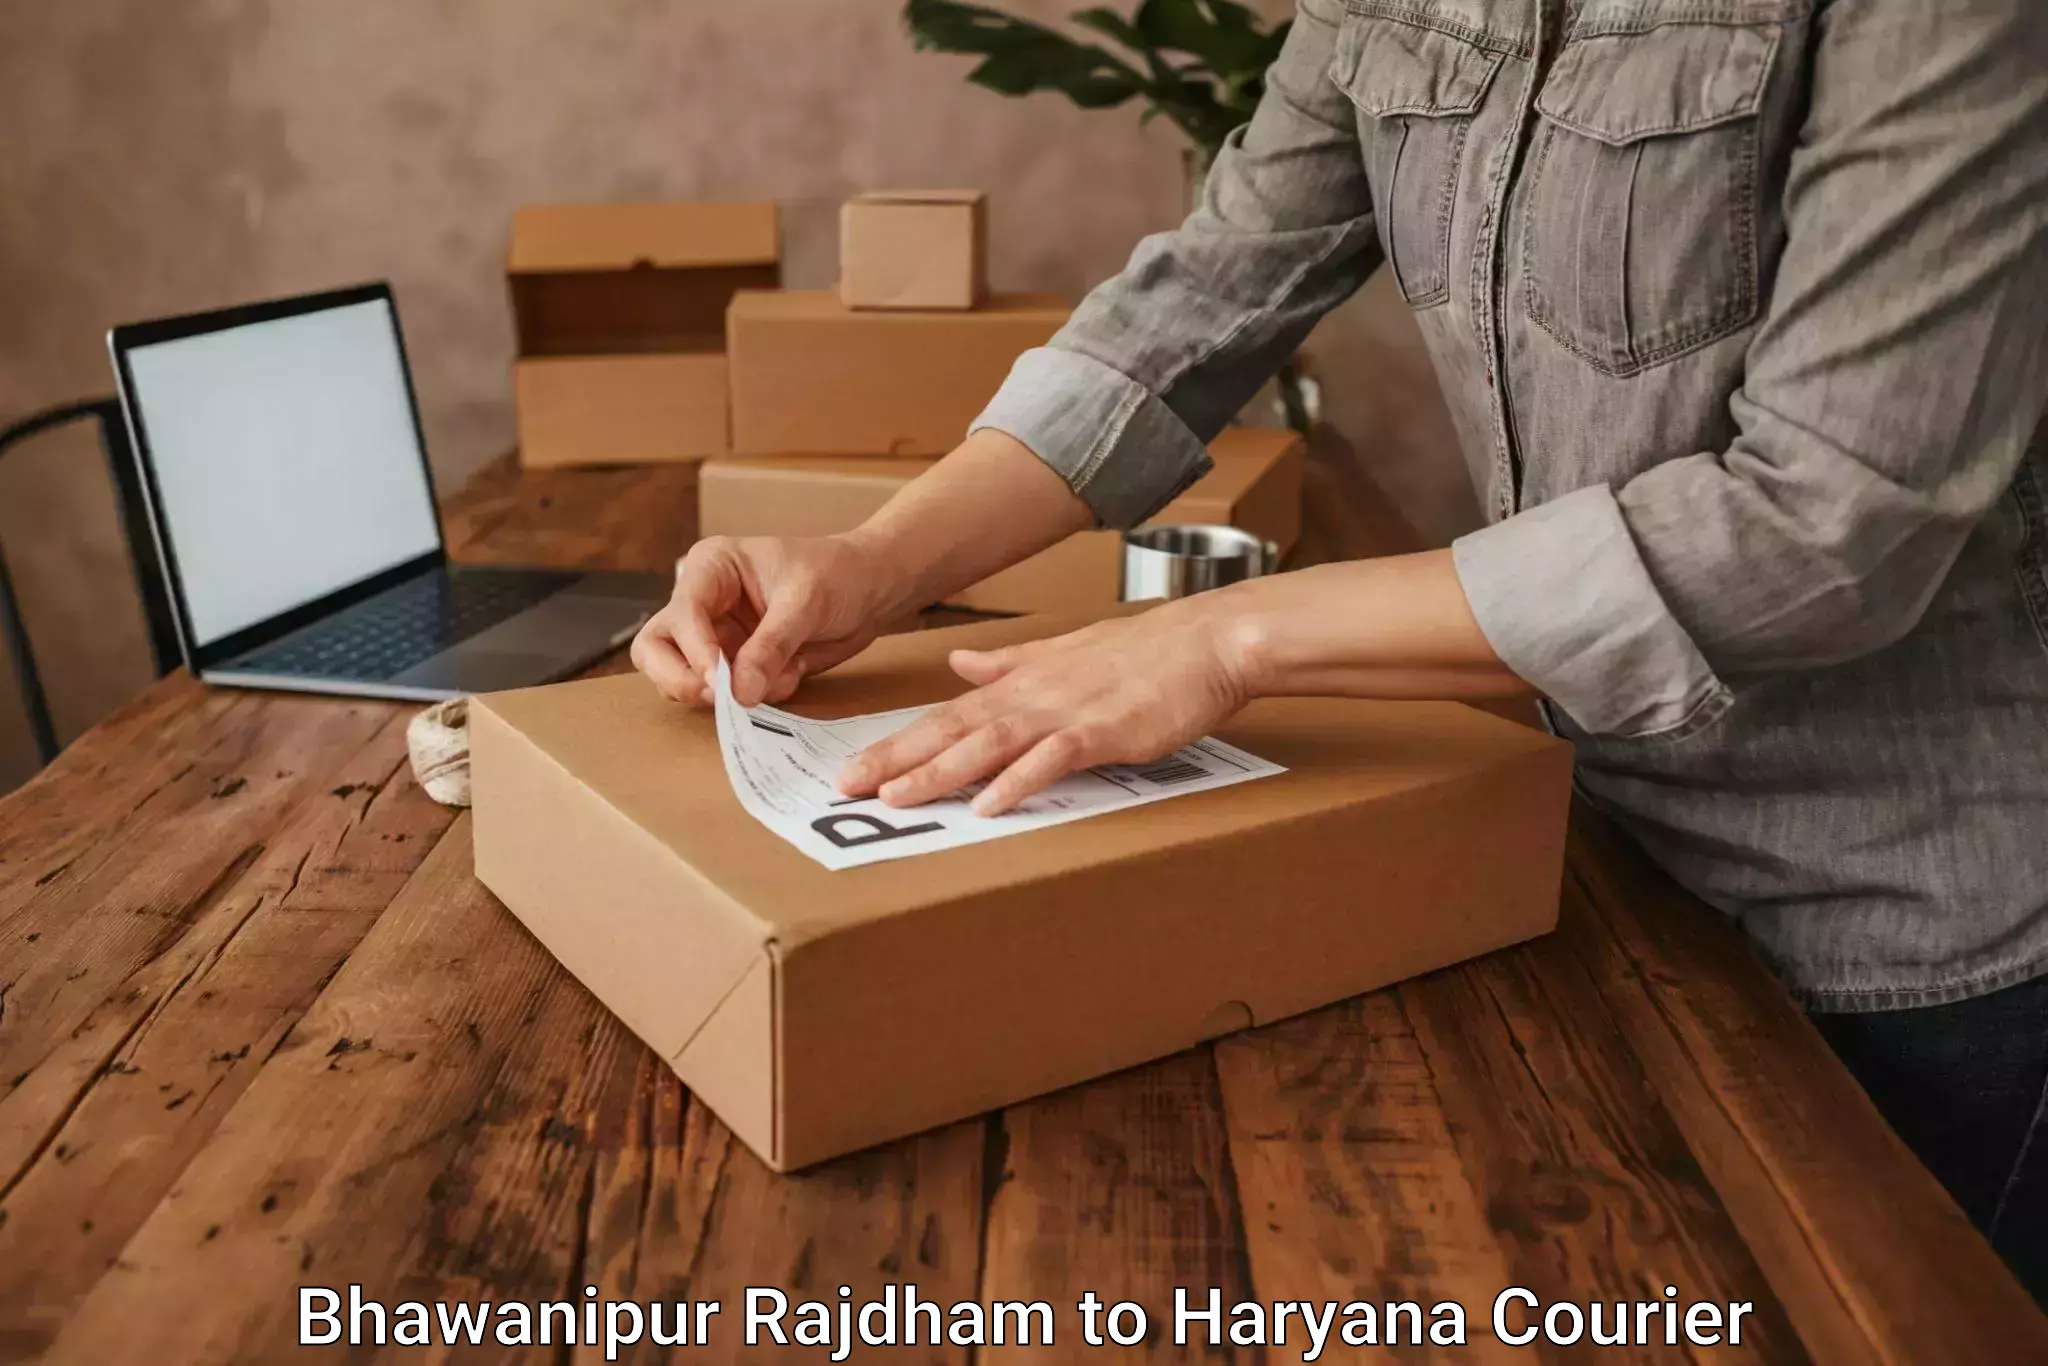 Professional moving company Bhawanipur Rajdham to Chaudhary Charan Singh Haryana Agricultural University Hisar